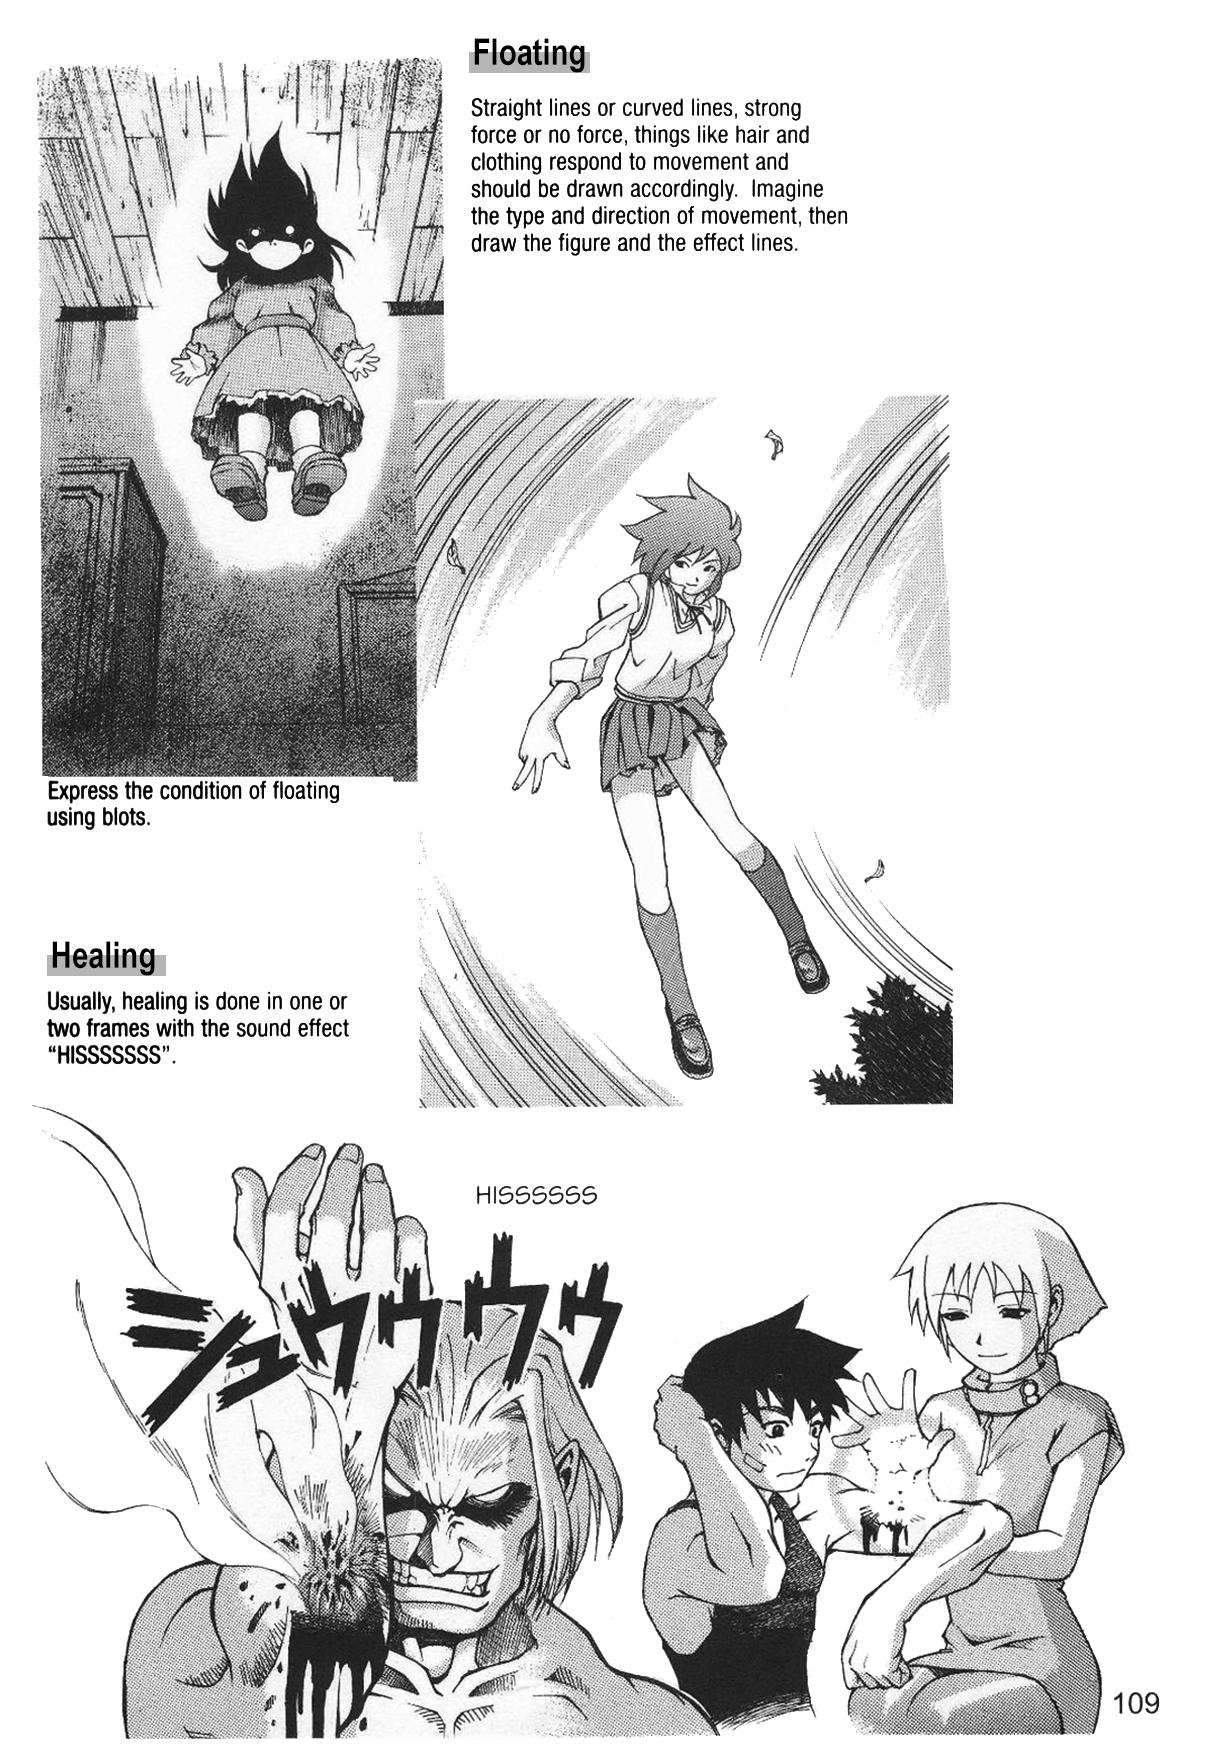 How to Draw Manga Vol. 24, Occult & Horror by Hikaru Hayashi 112